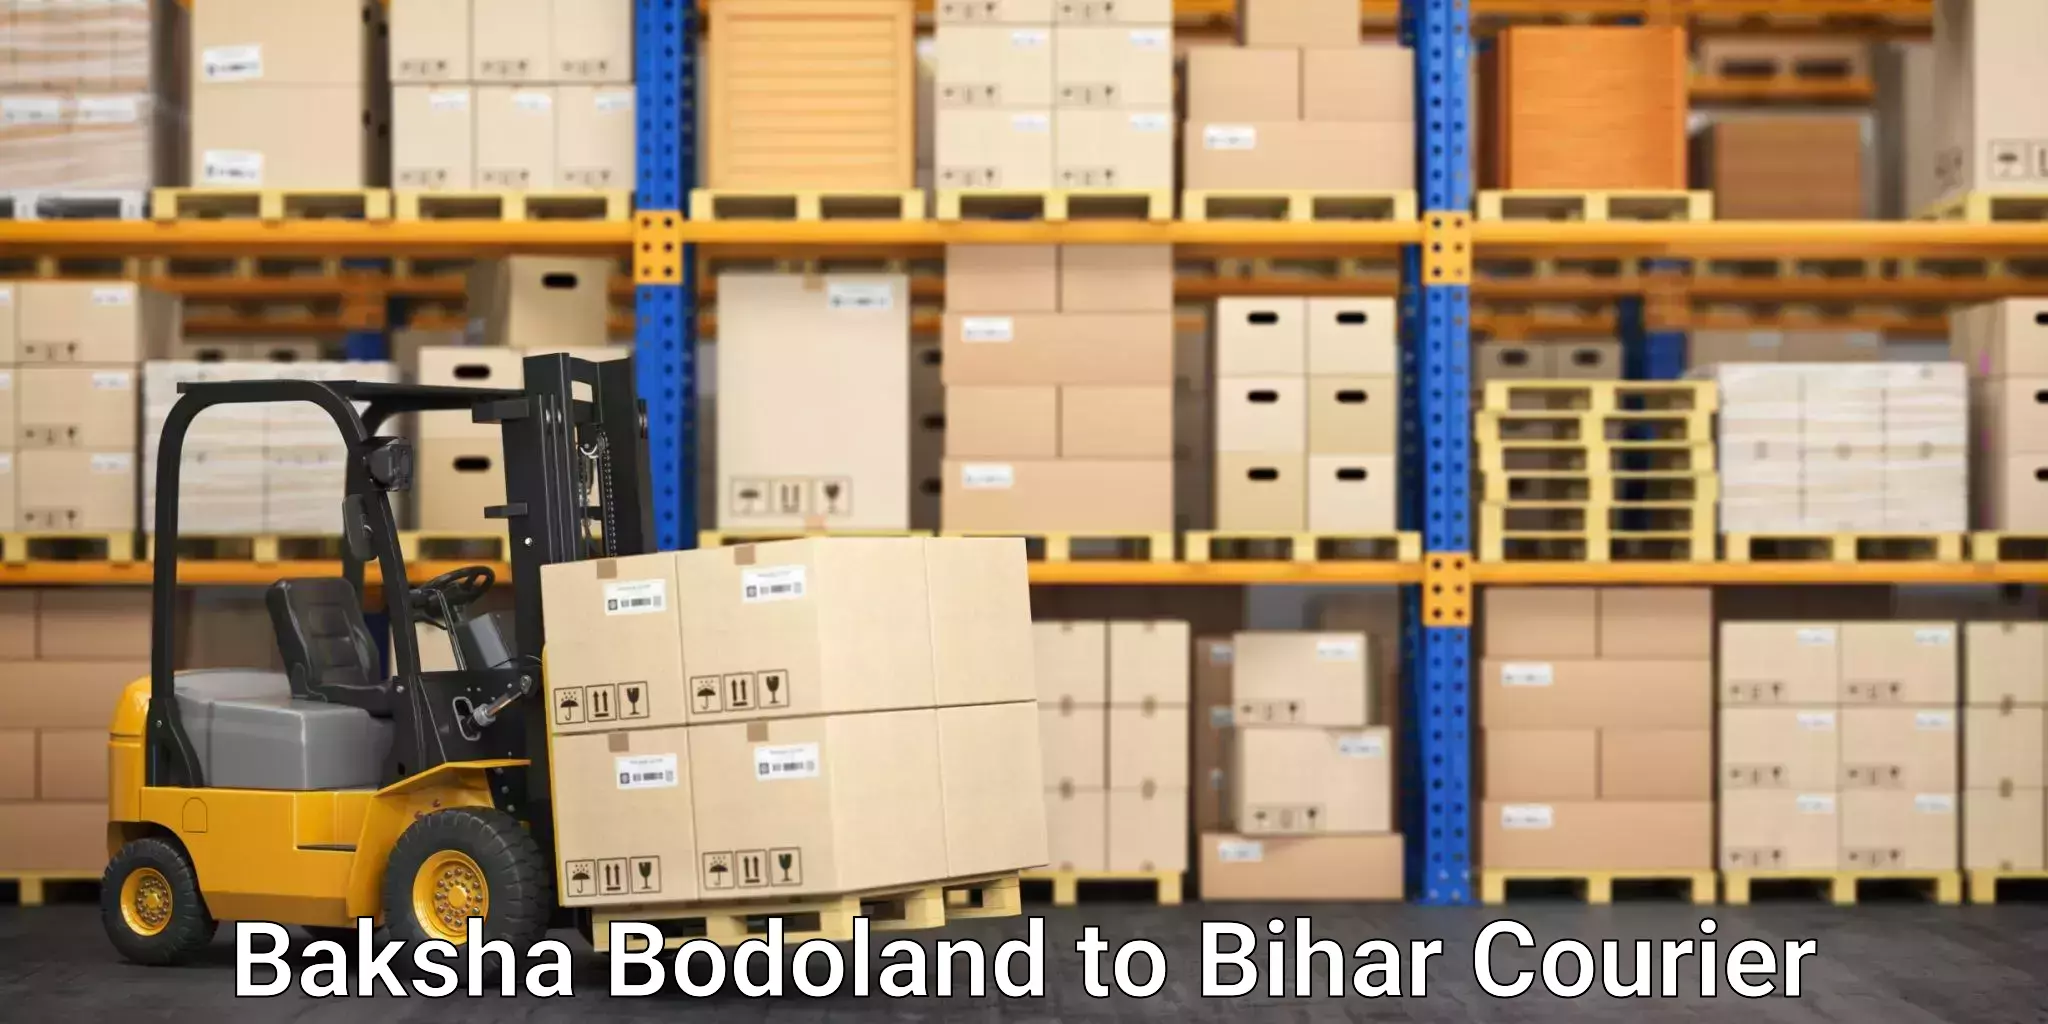 24-hour courier service Baksha Bodoland to Gaya